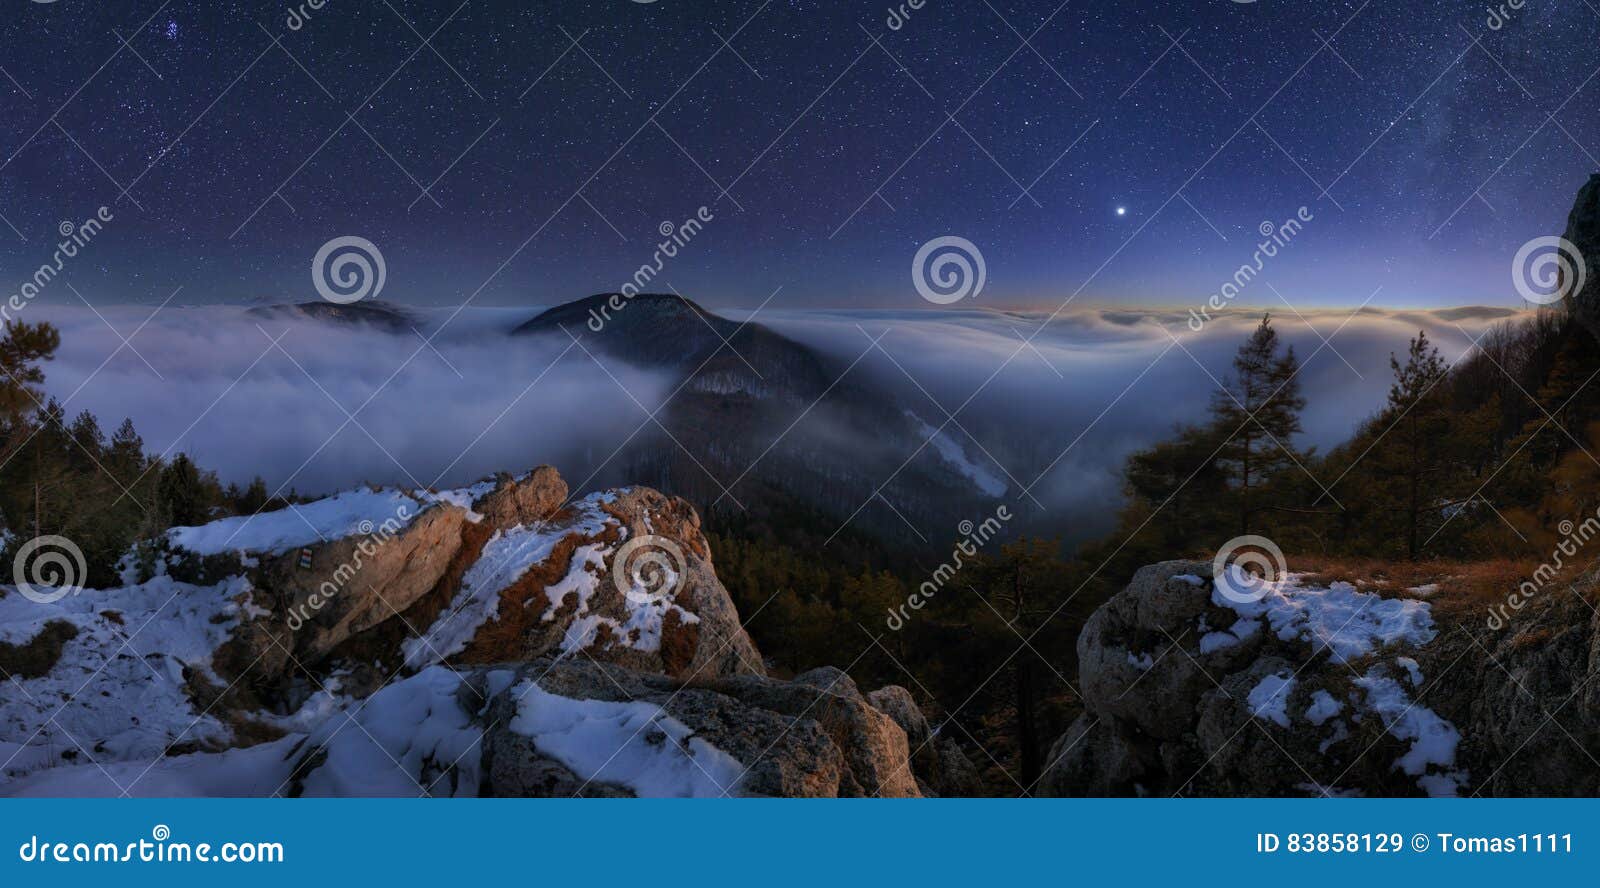 night mountain panoramic view landcape